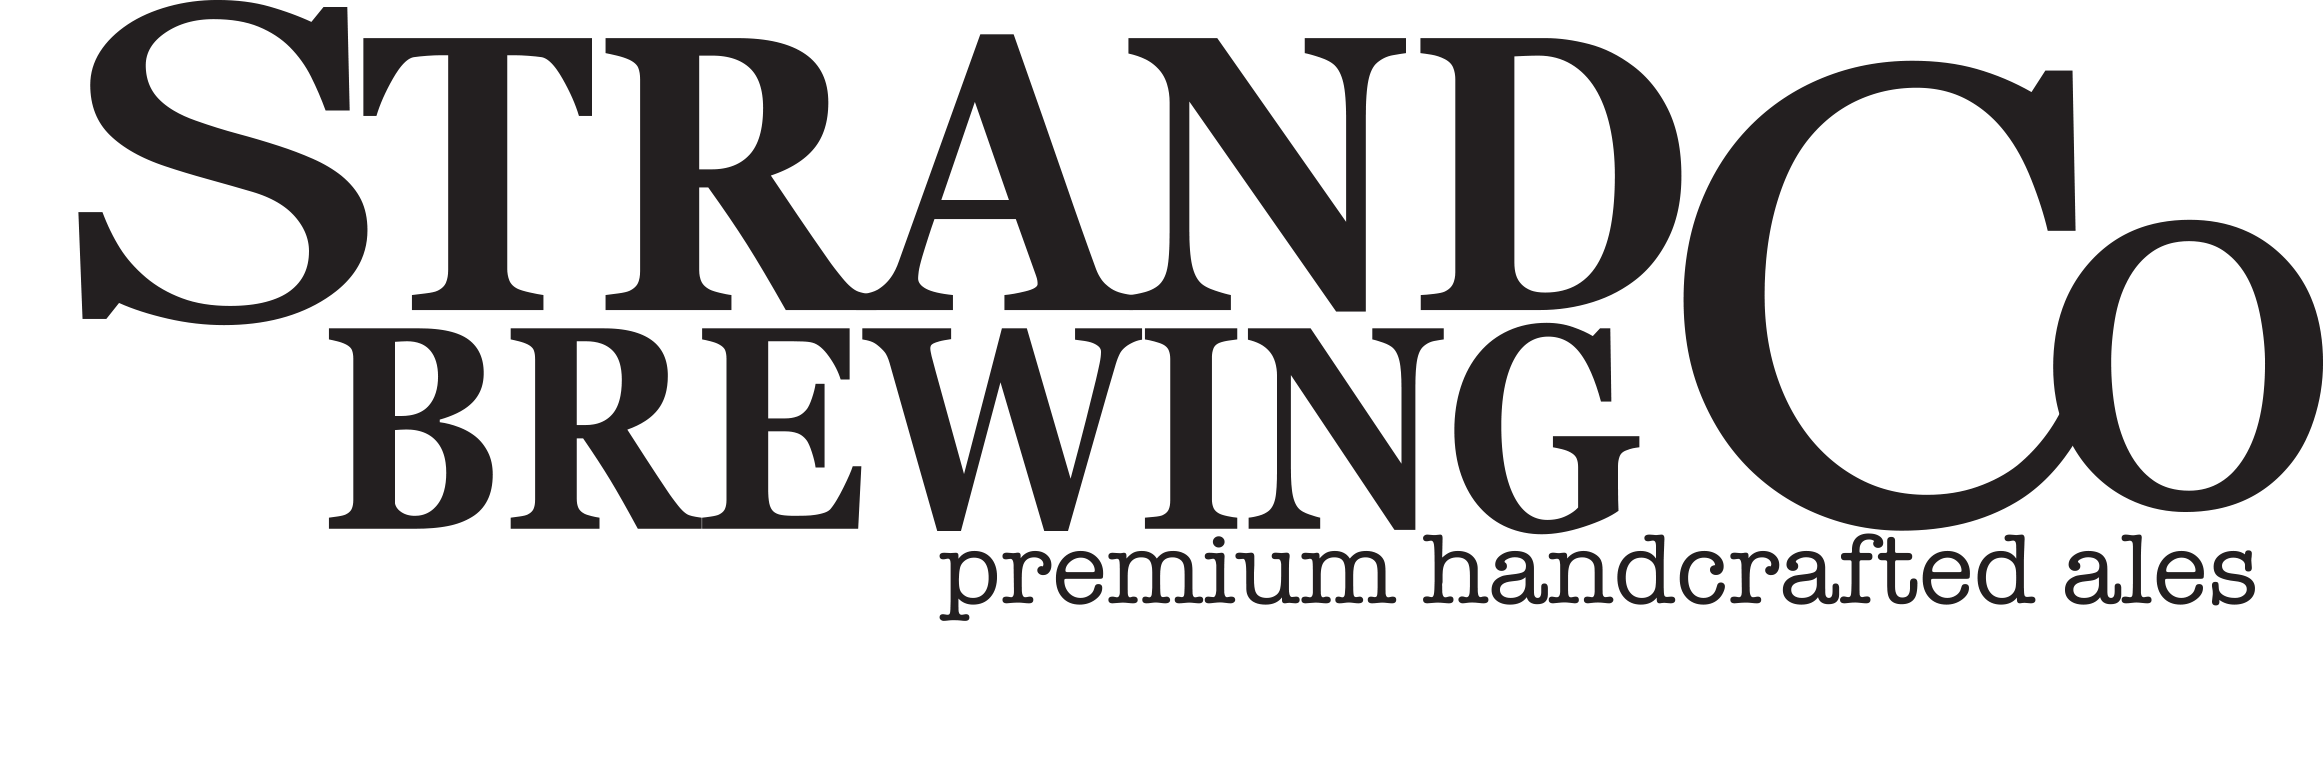 Strand Brewing Company